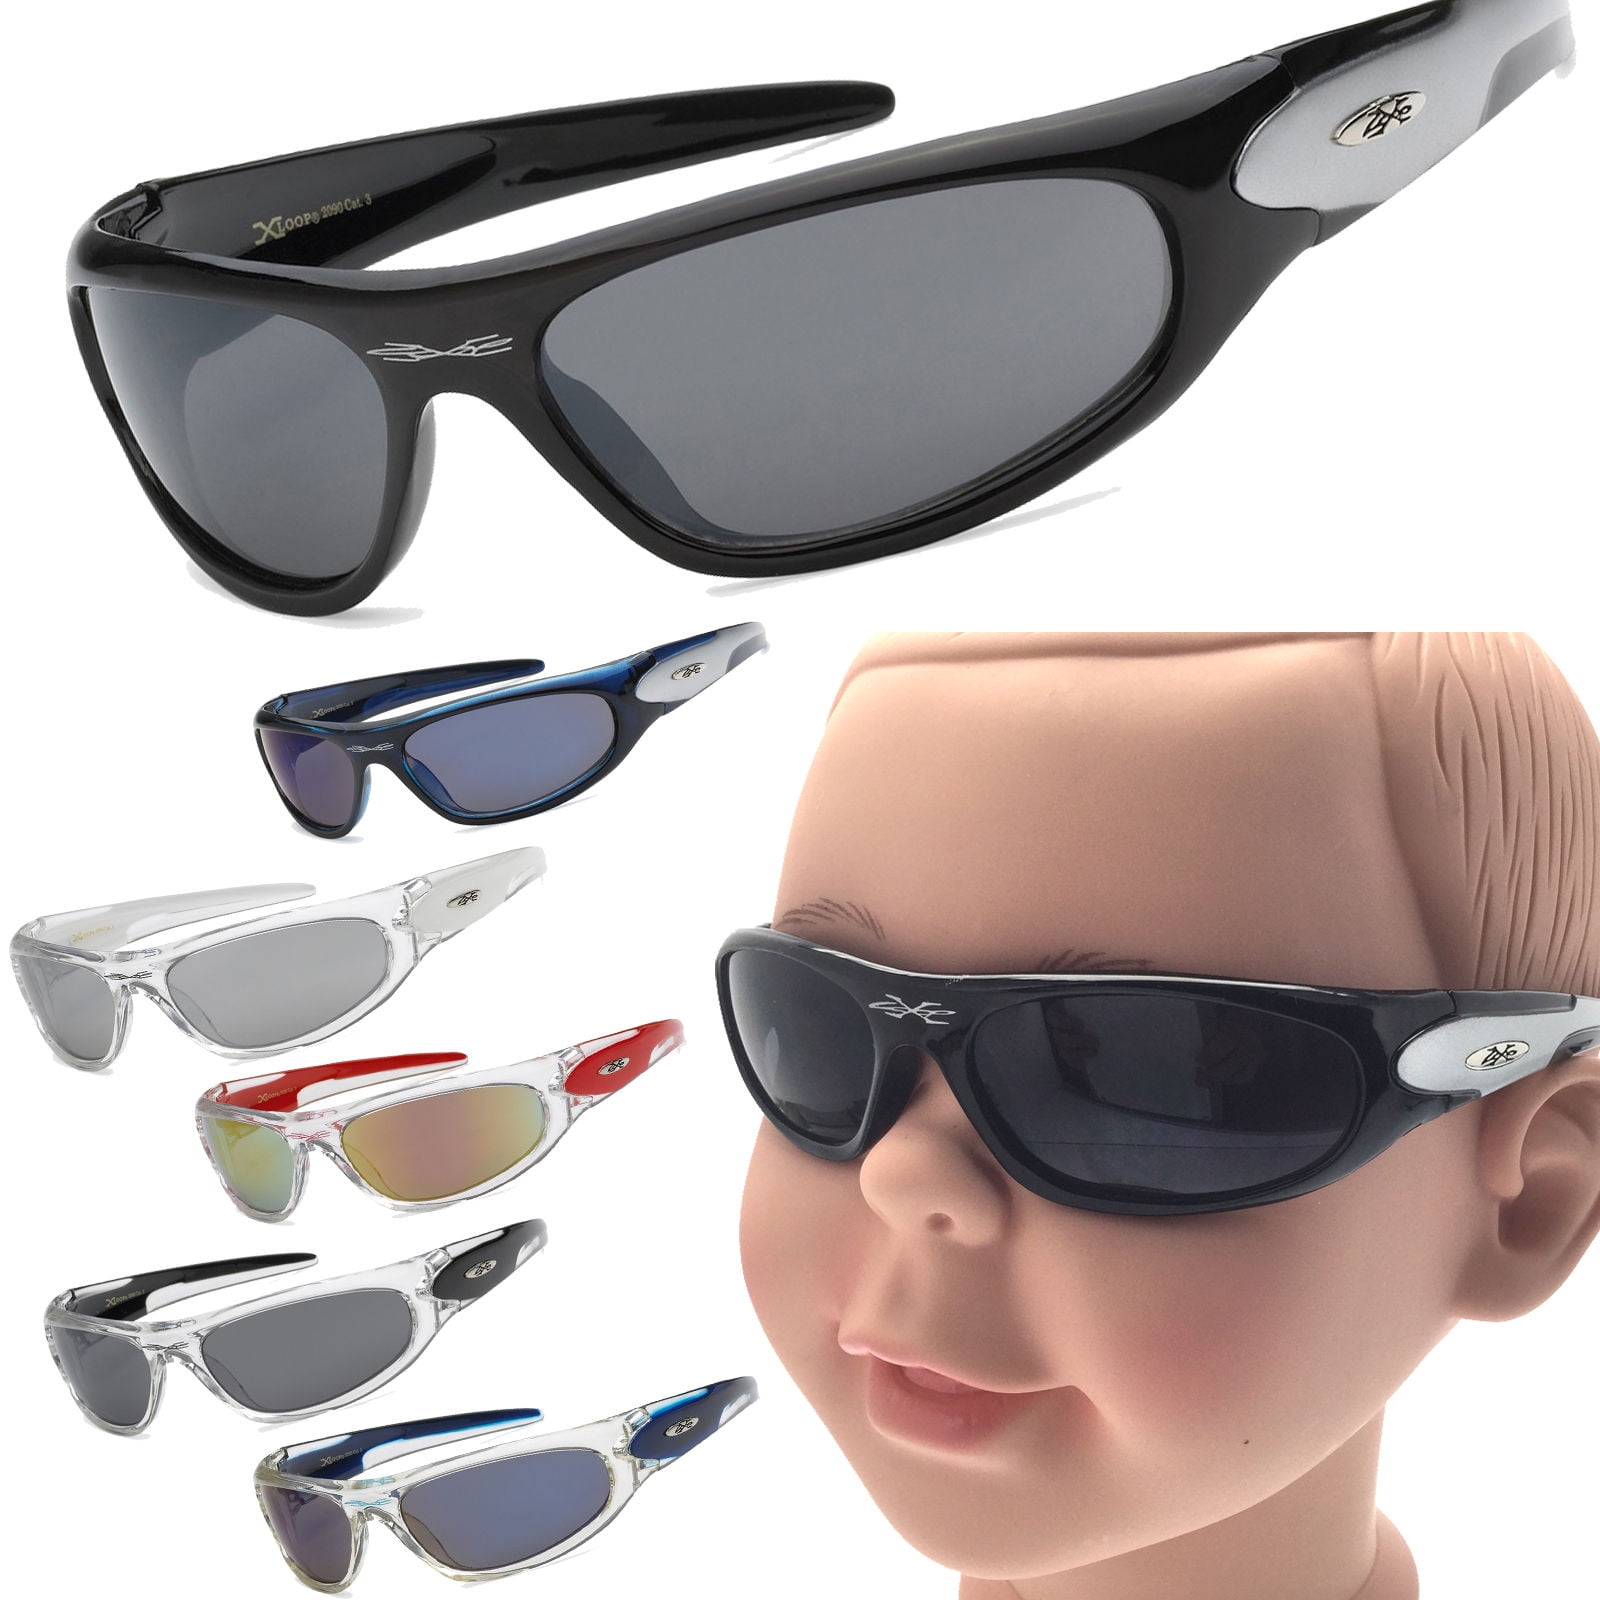 New Kids x-loop sport 100% UV400 sunglasses baseball/softball 4-12 